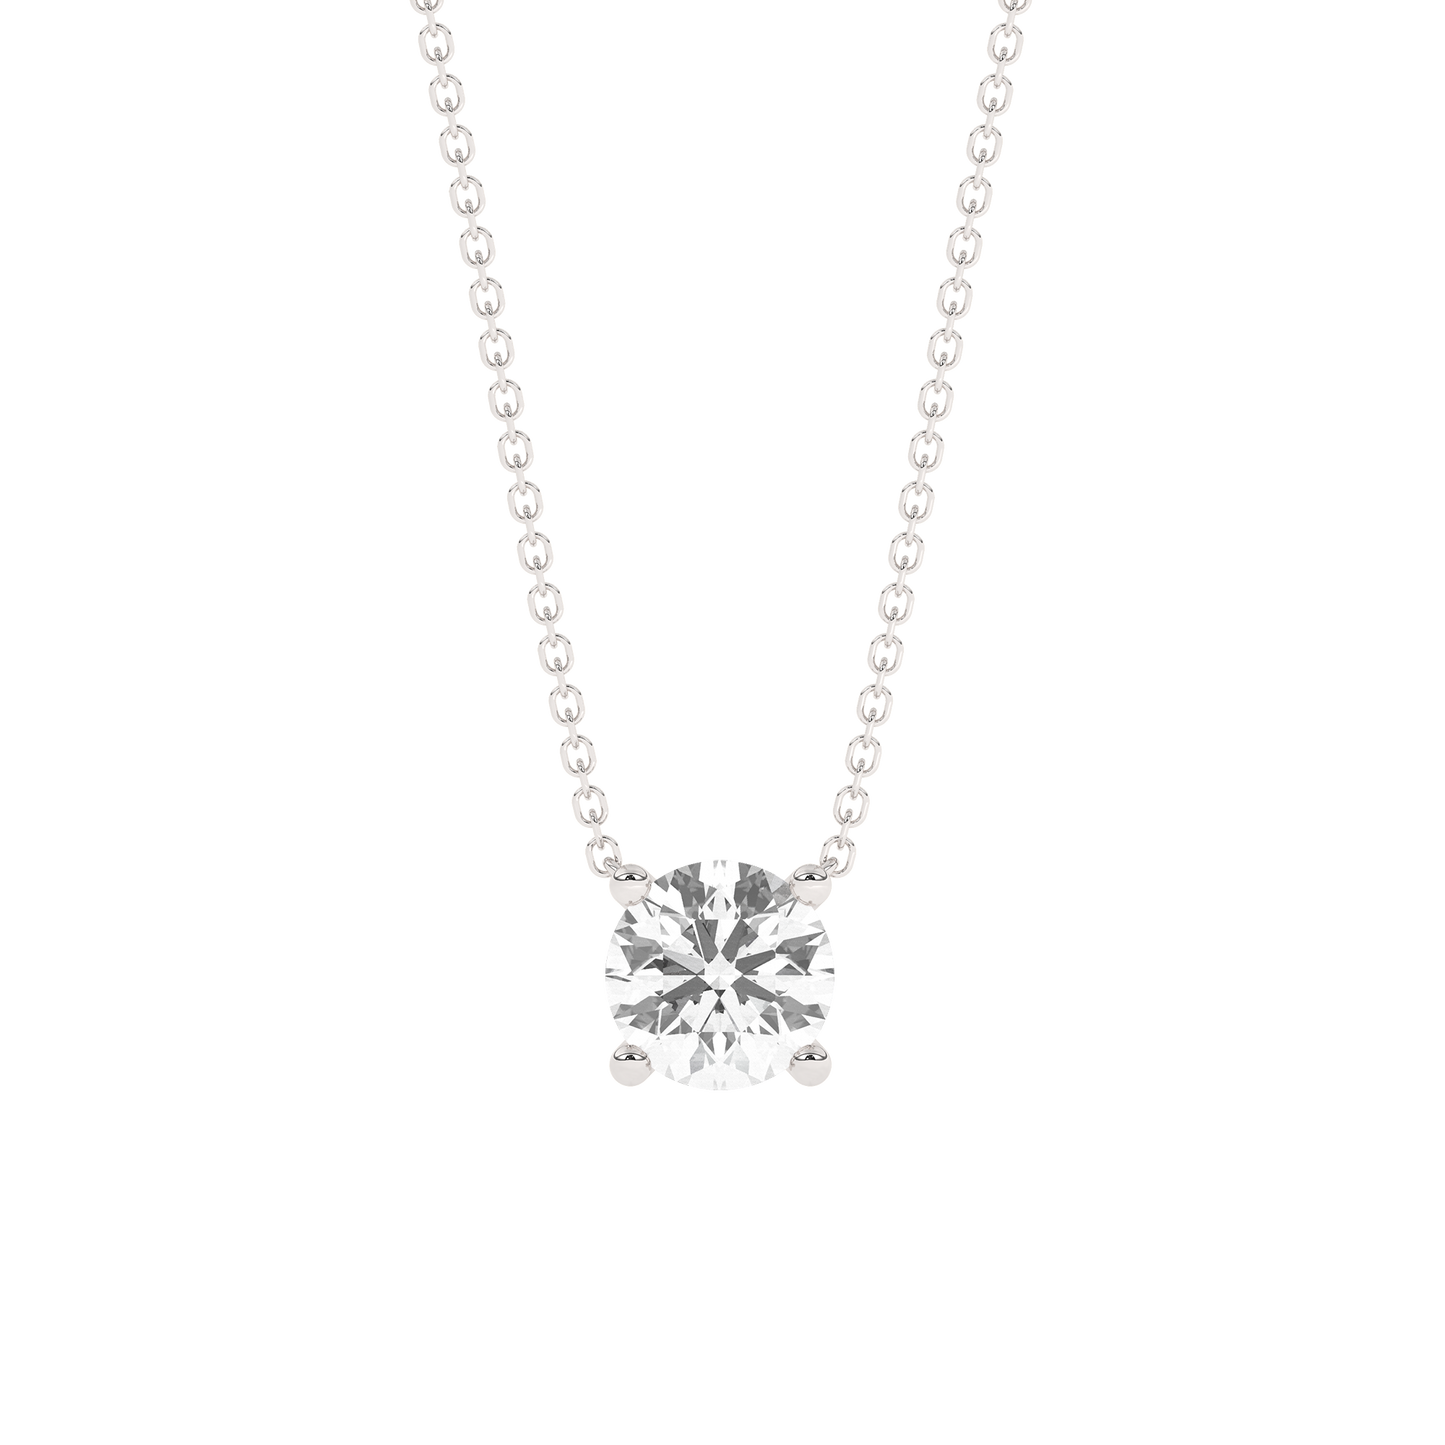 Prong Diamond Necklace Extra Large (0.5 ct.) 14K White Gold